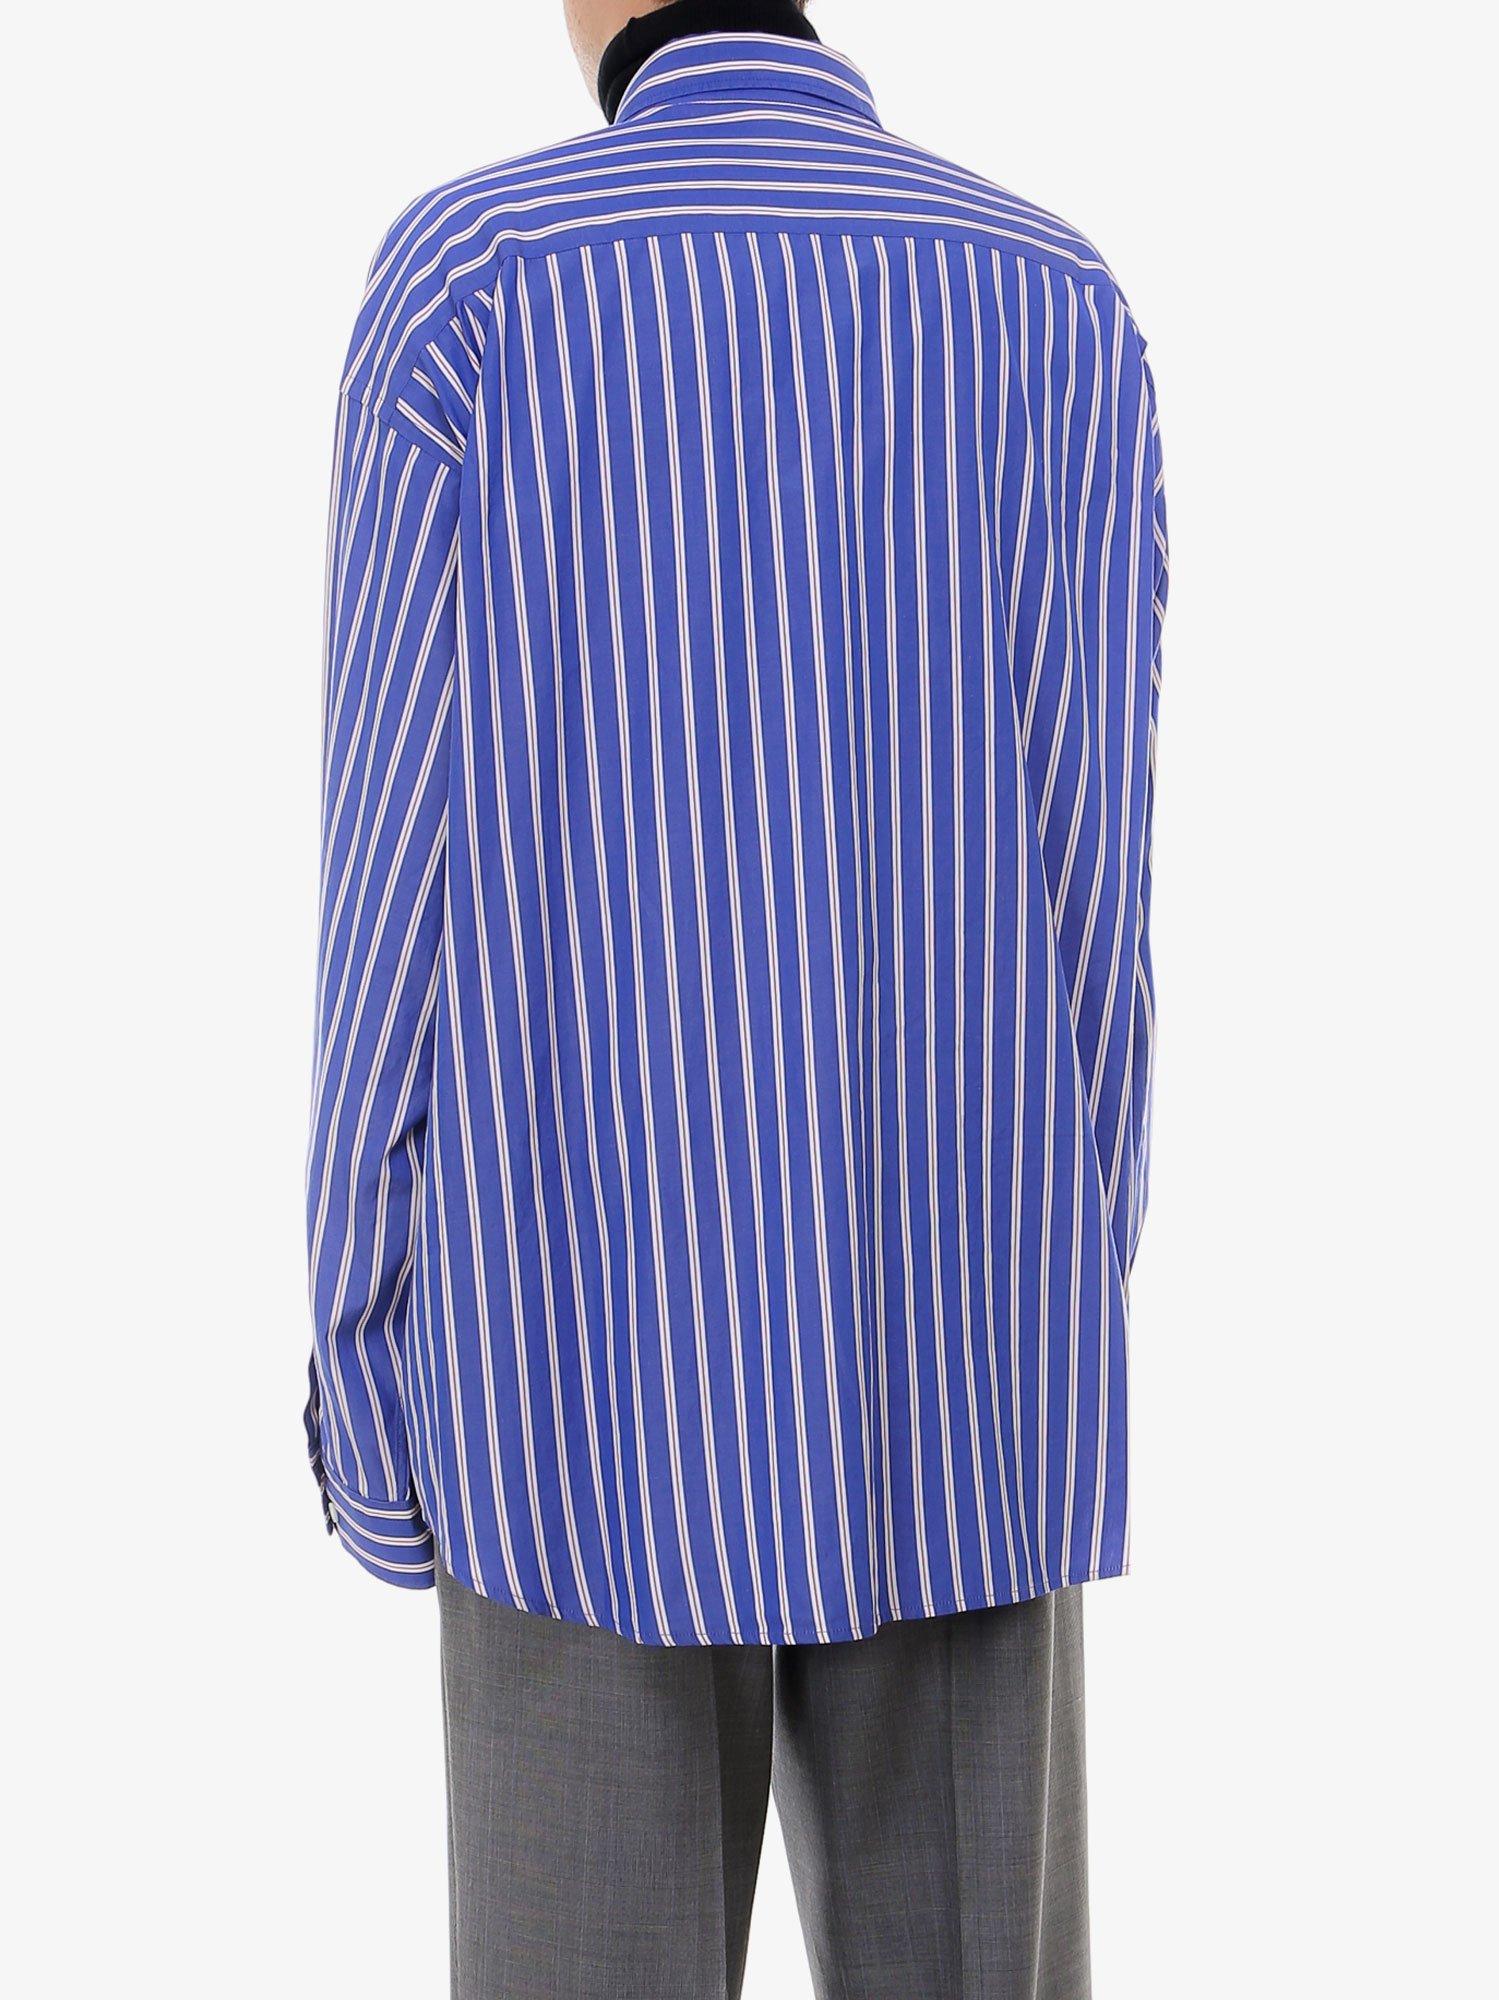 Balenciaga Cotton Shirt in Blue for Men - Lyst